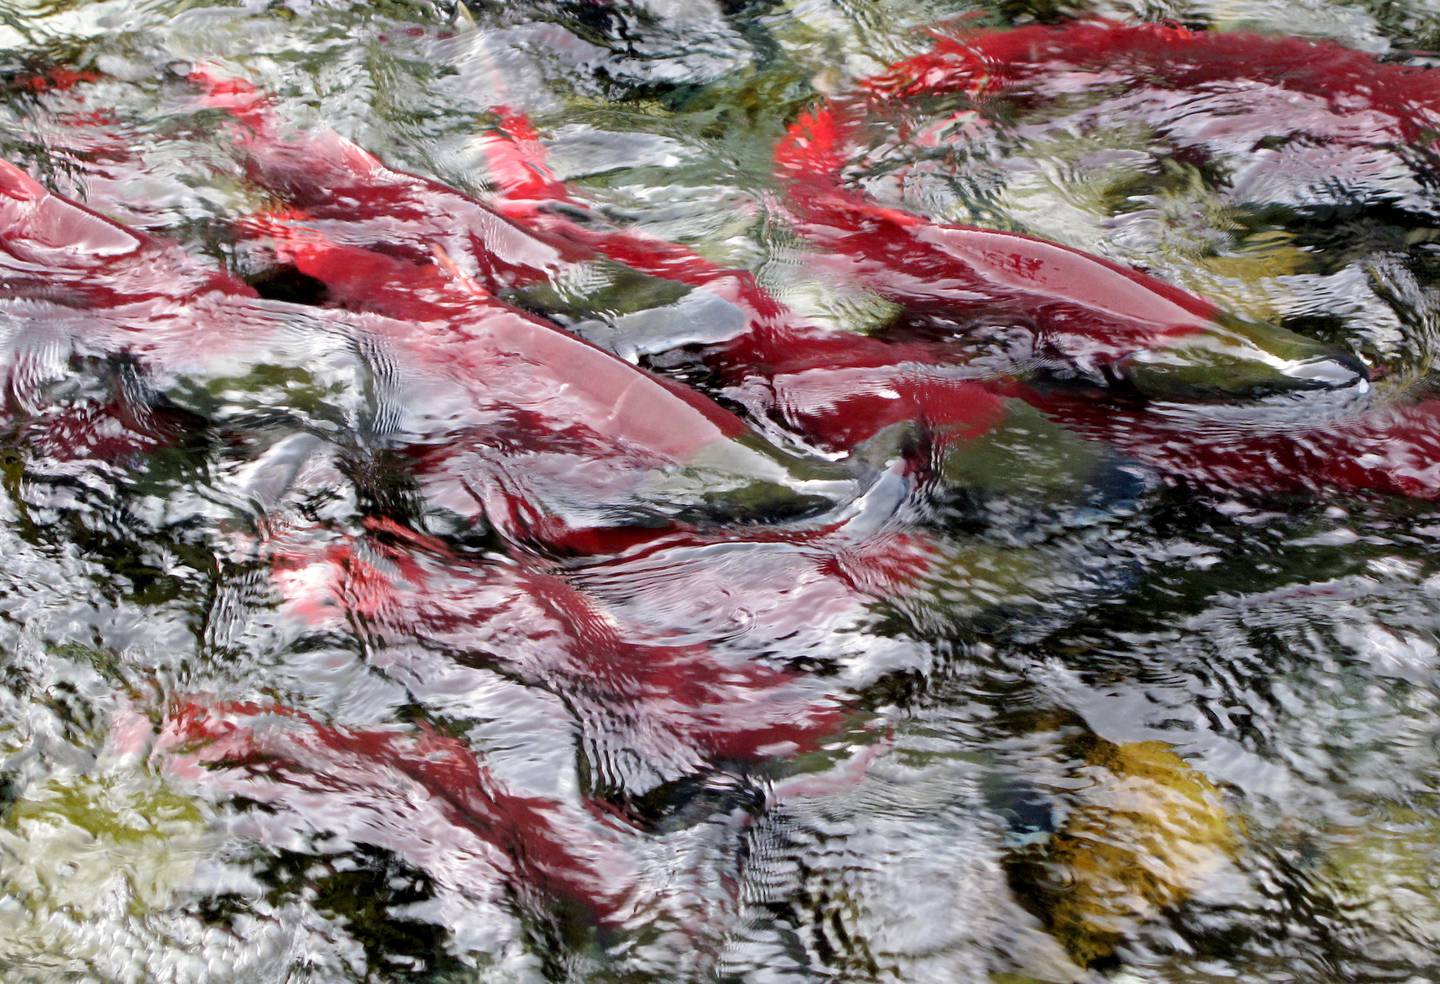 Red salmon gather at a Gulkana Hatchery